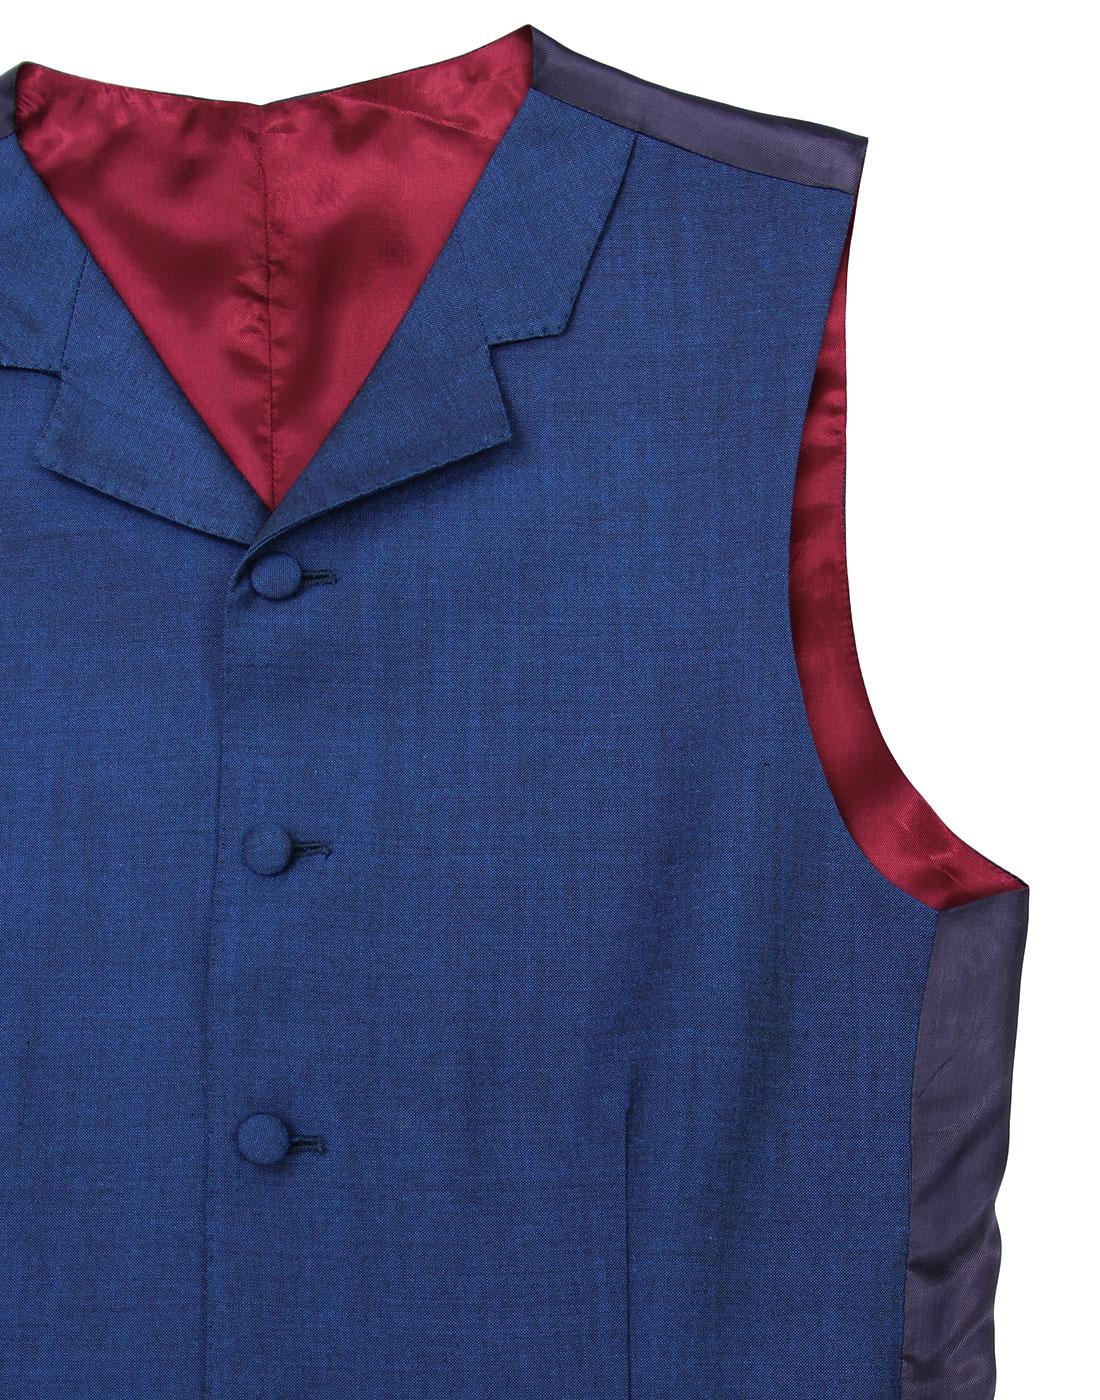 MADCAP ENGLAND Mod Mohair Tonic Lapel Waistcoat in Blue